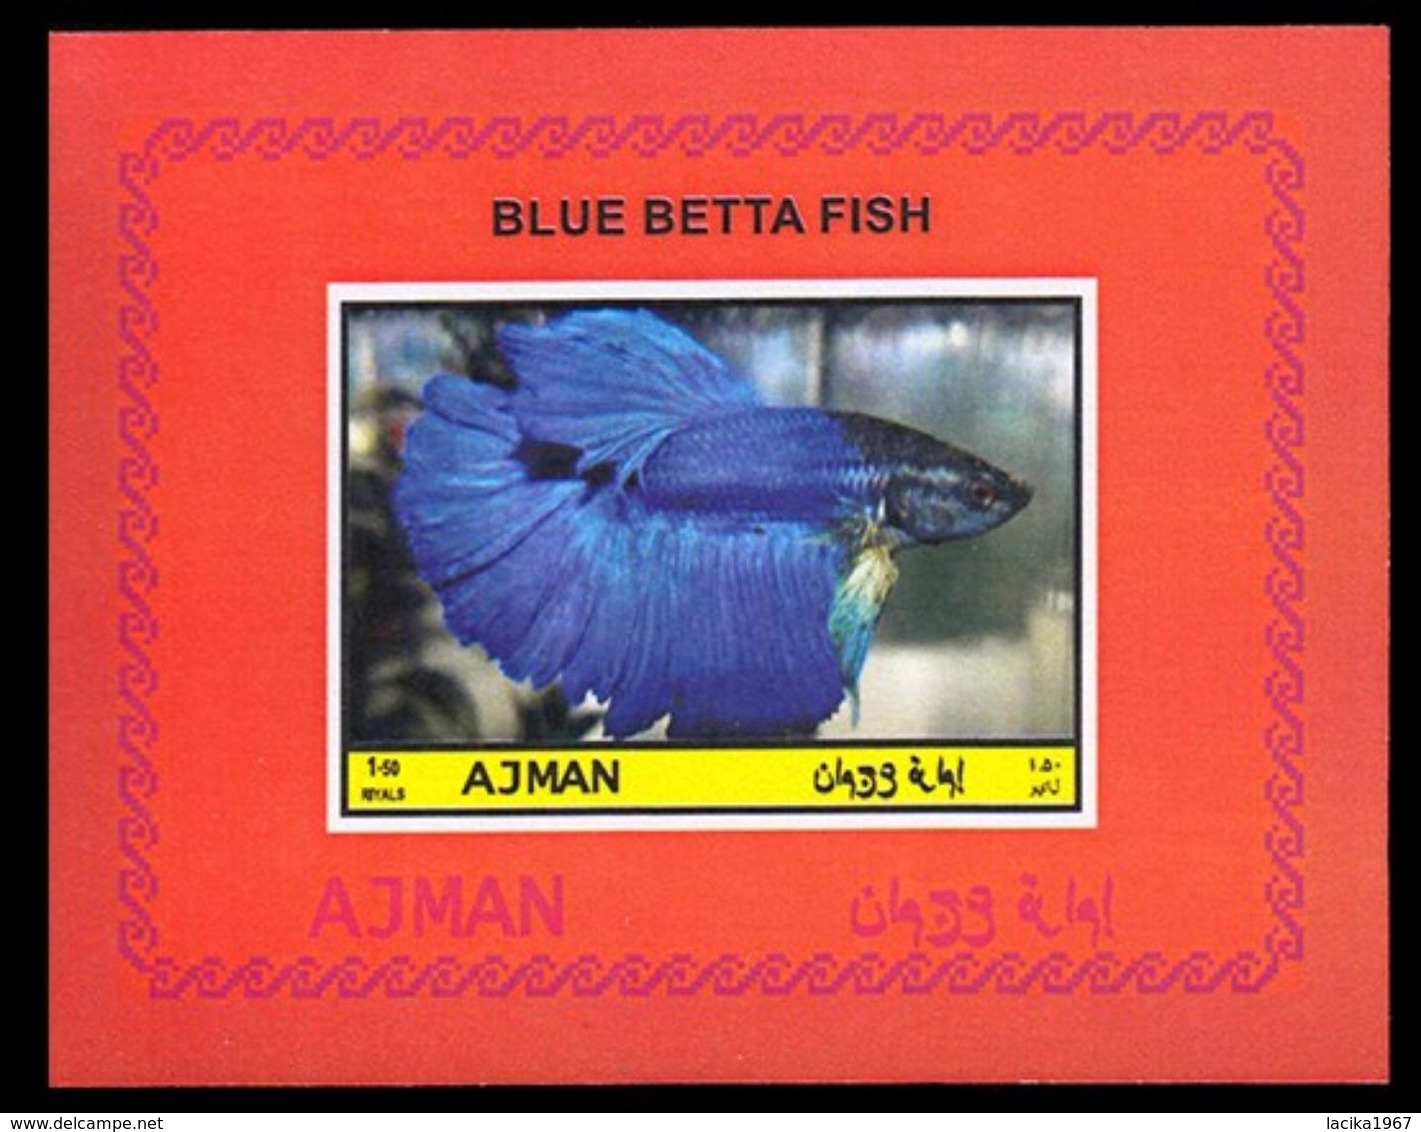 Fish, Betta splendens, Ajman